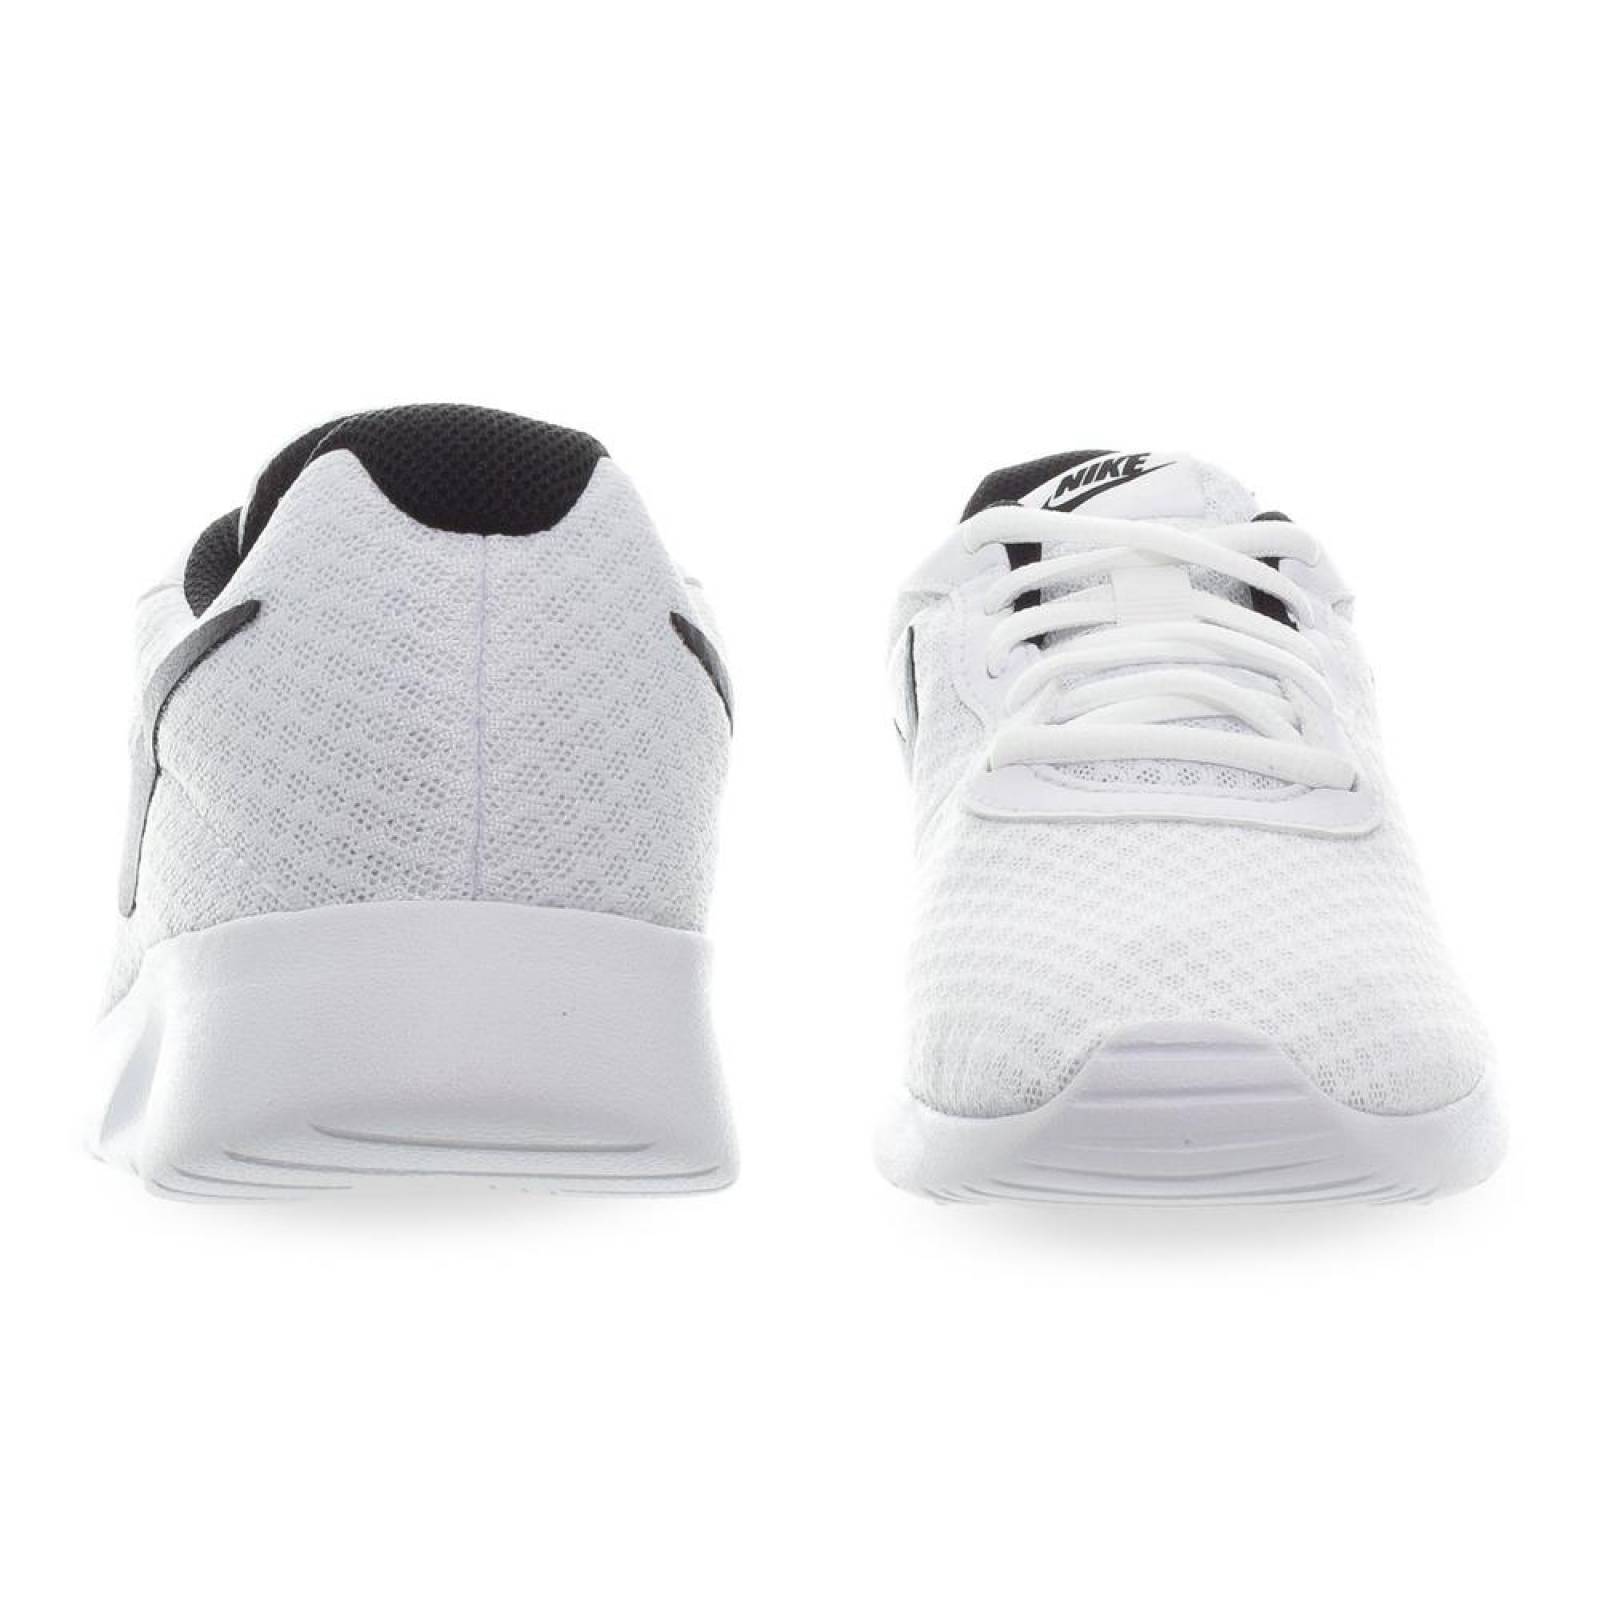 Tenis Nike Tanjun - 812655100 - Blanco - Mujer 